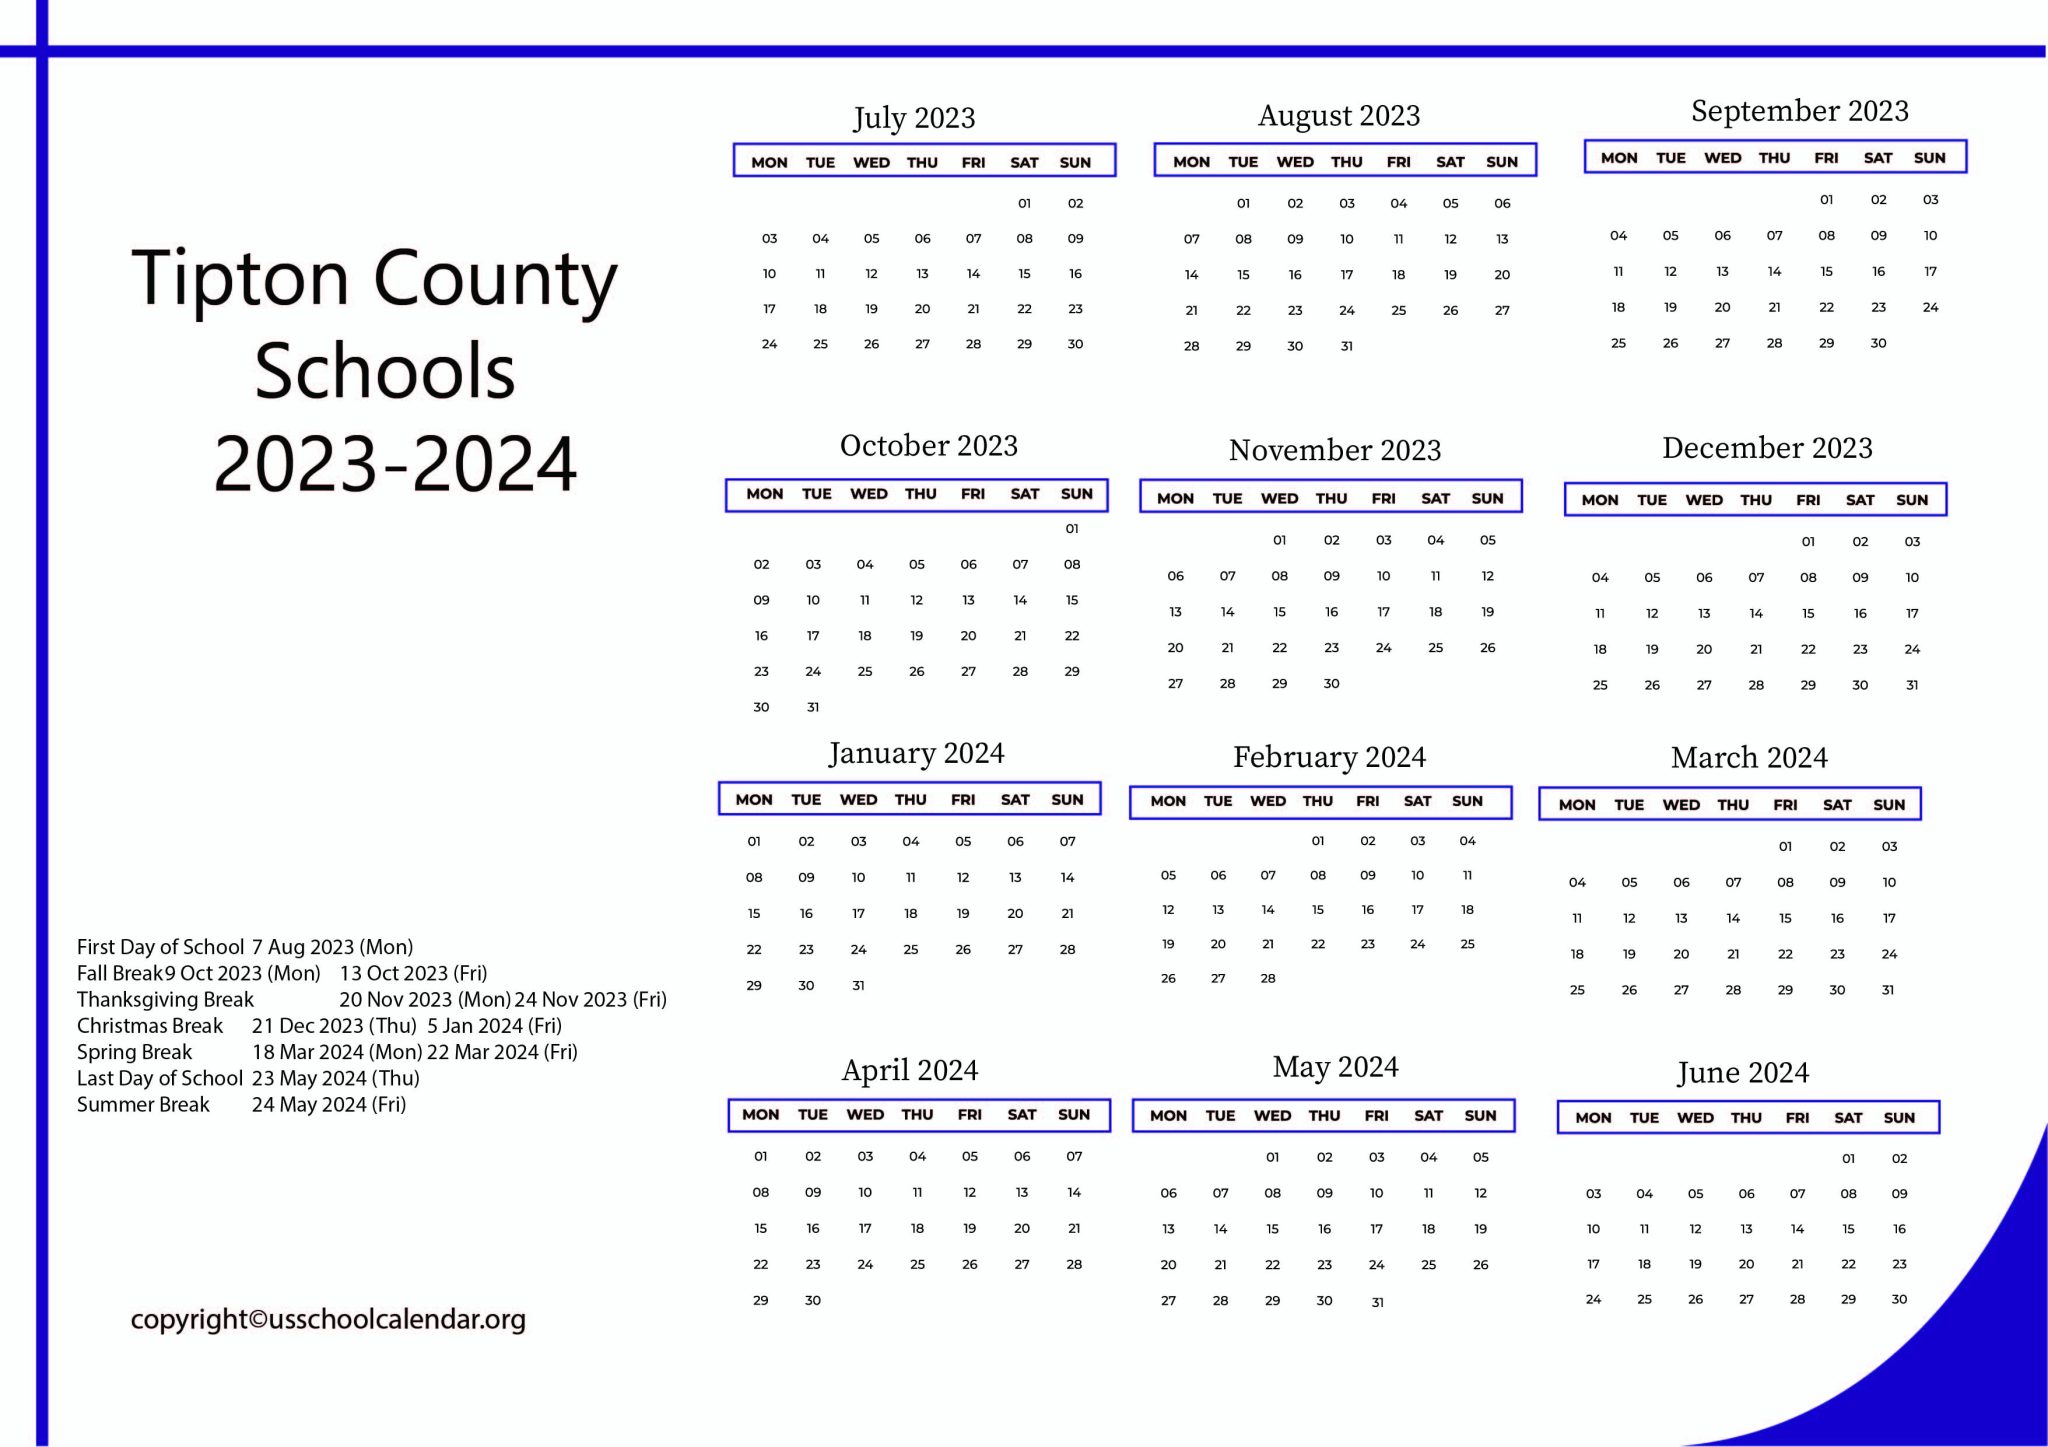 Tipton County Schools Calendar With Holidays 2023 2024